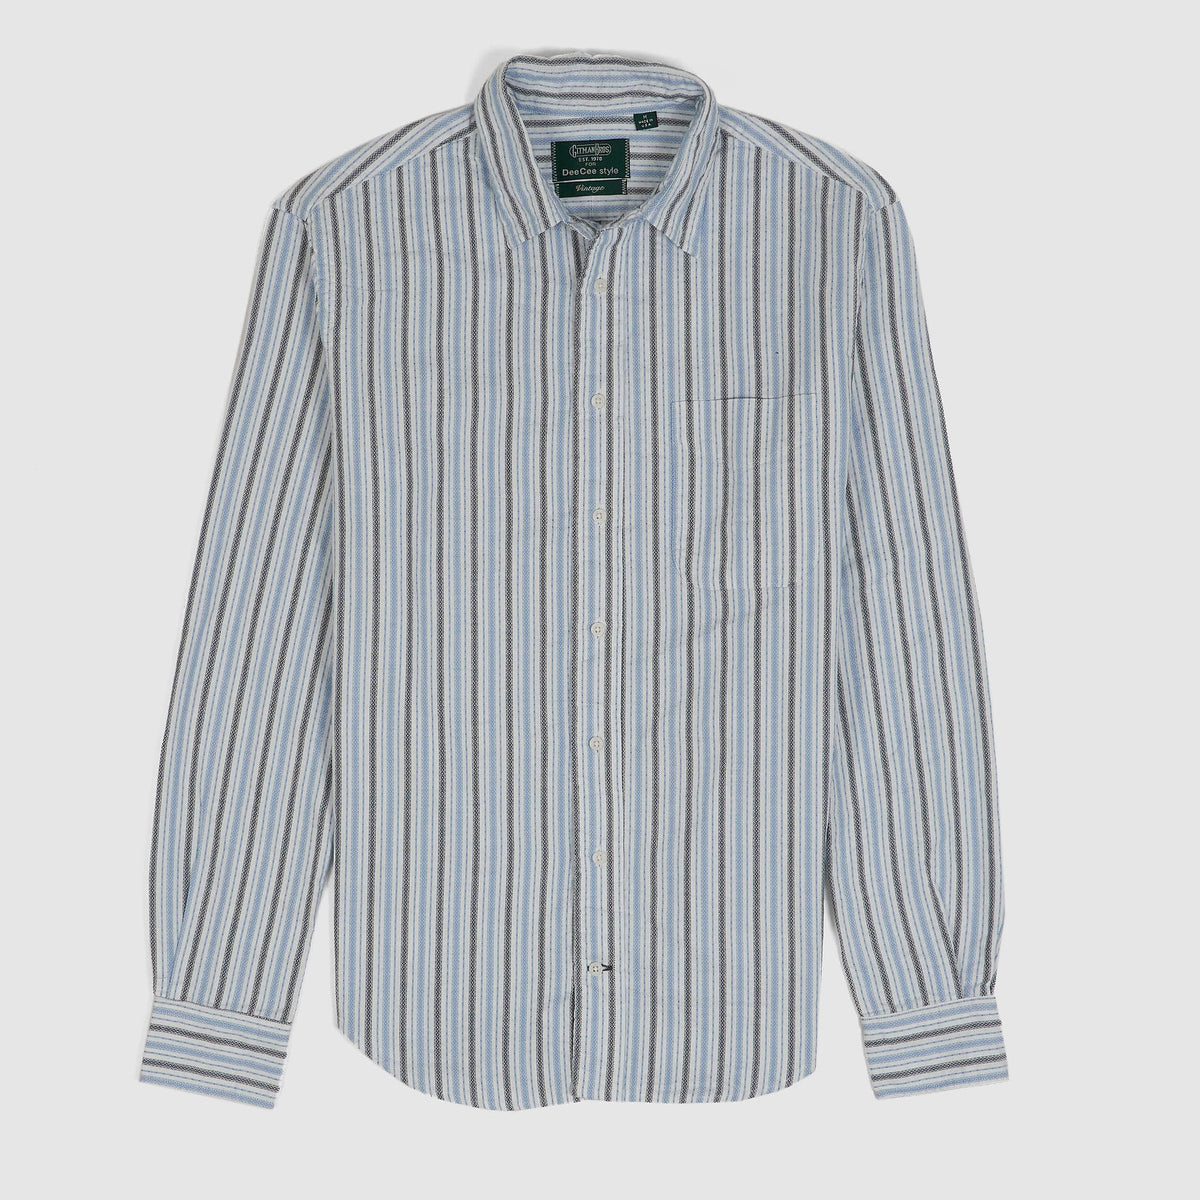 Gitman Vintage for DeeCee style Woven Vintage Stripes Cotton Shirts